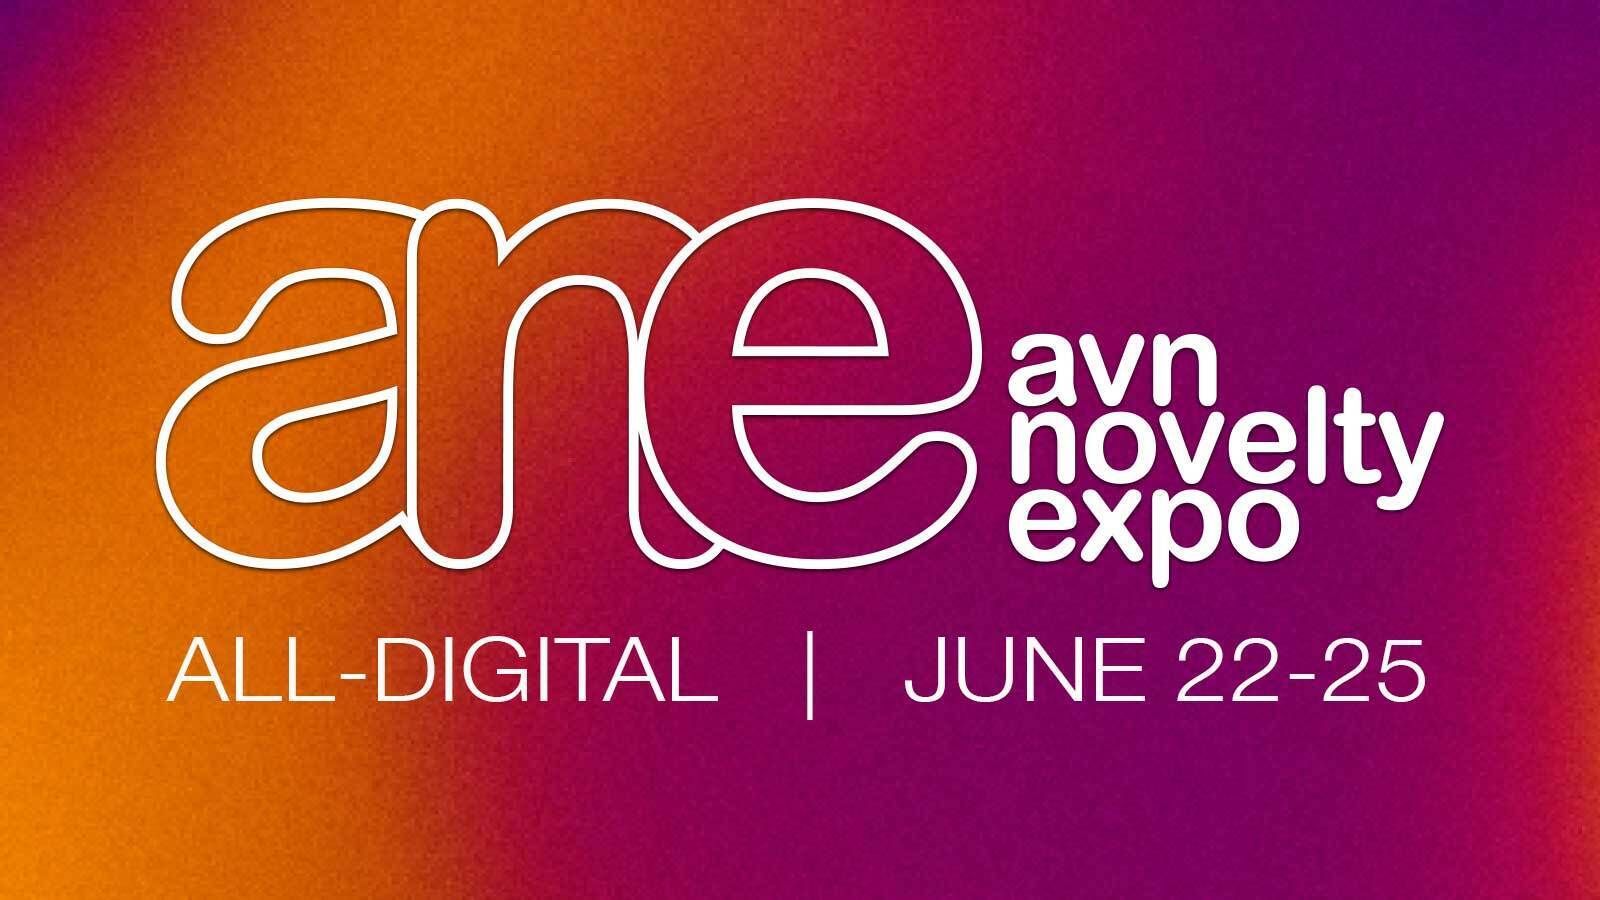 Adult Novelty Expo Returns for All-Digital Summer Show in June